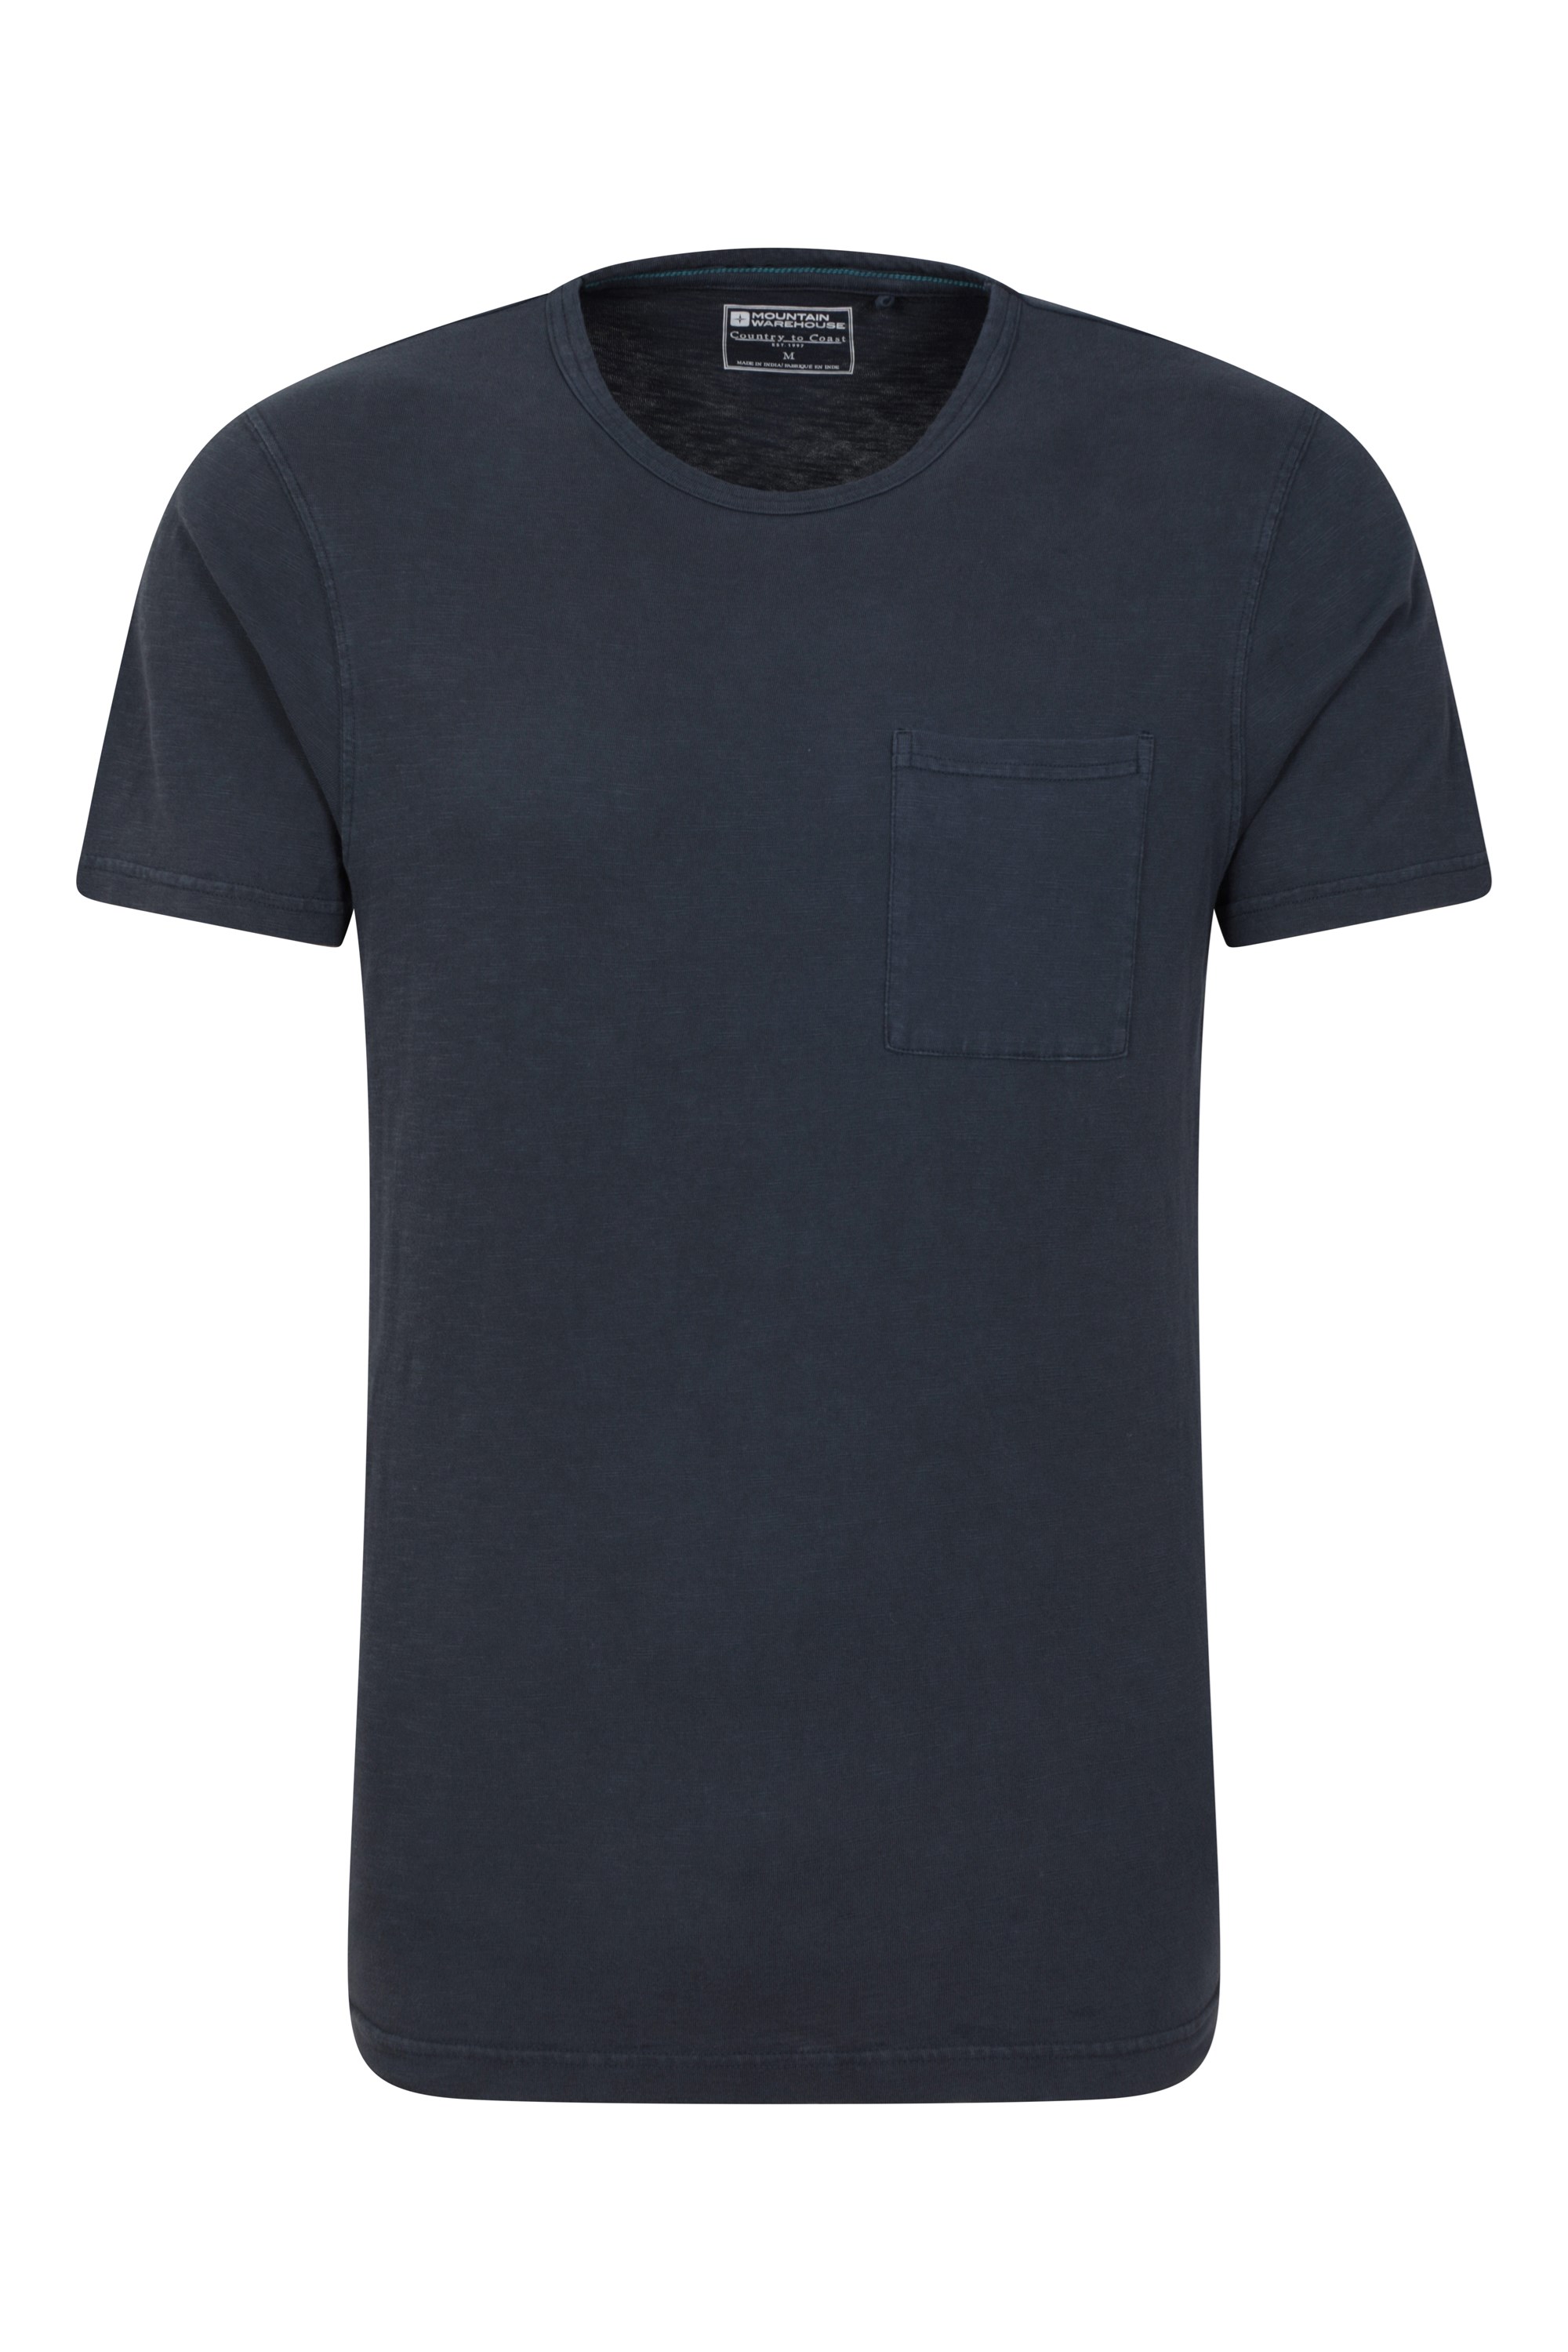 Fescue Mens Pocket T-shirt - Navy